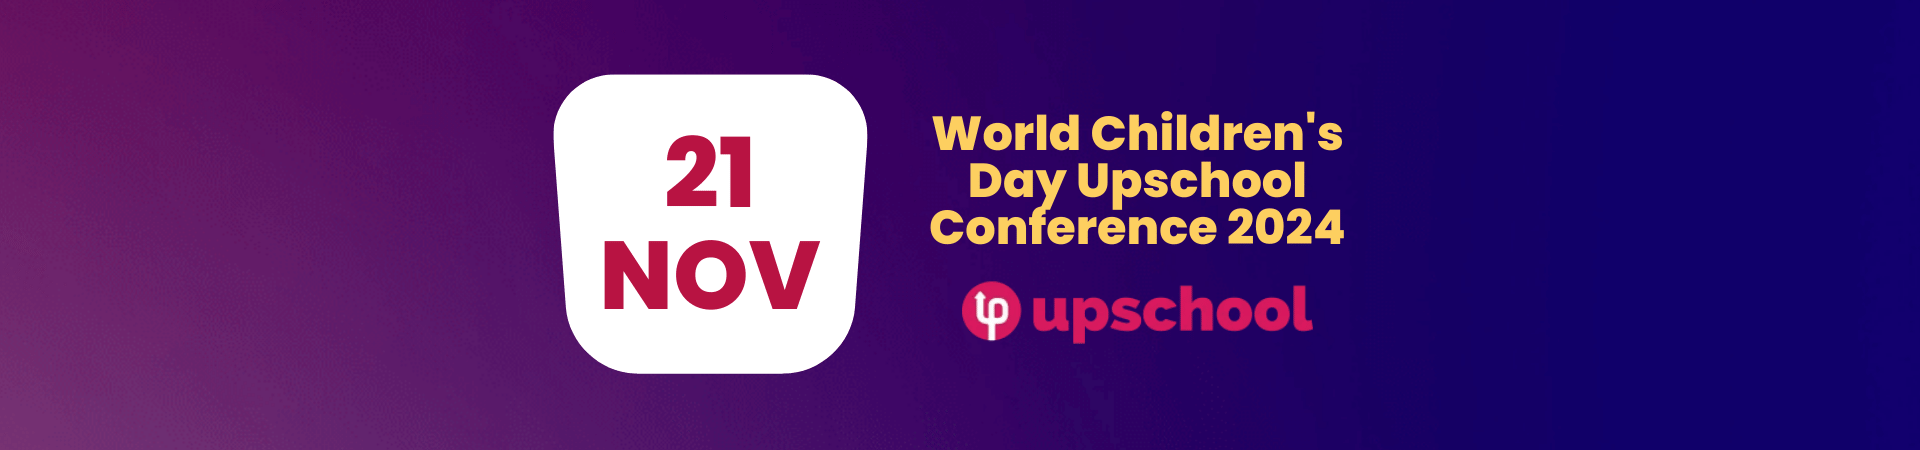 World Children’s Day Upschool Conference 2024